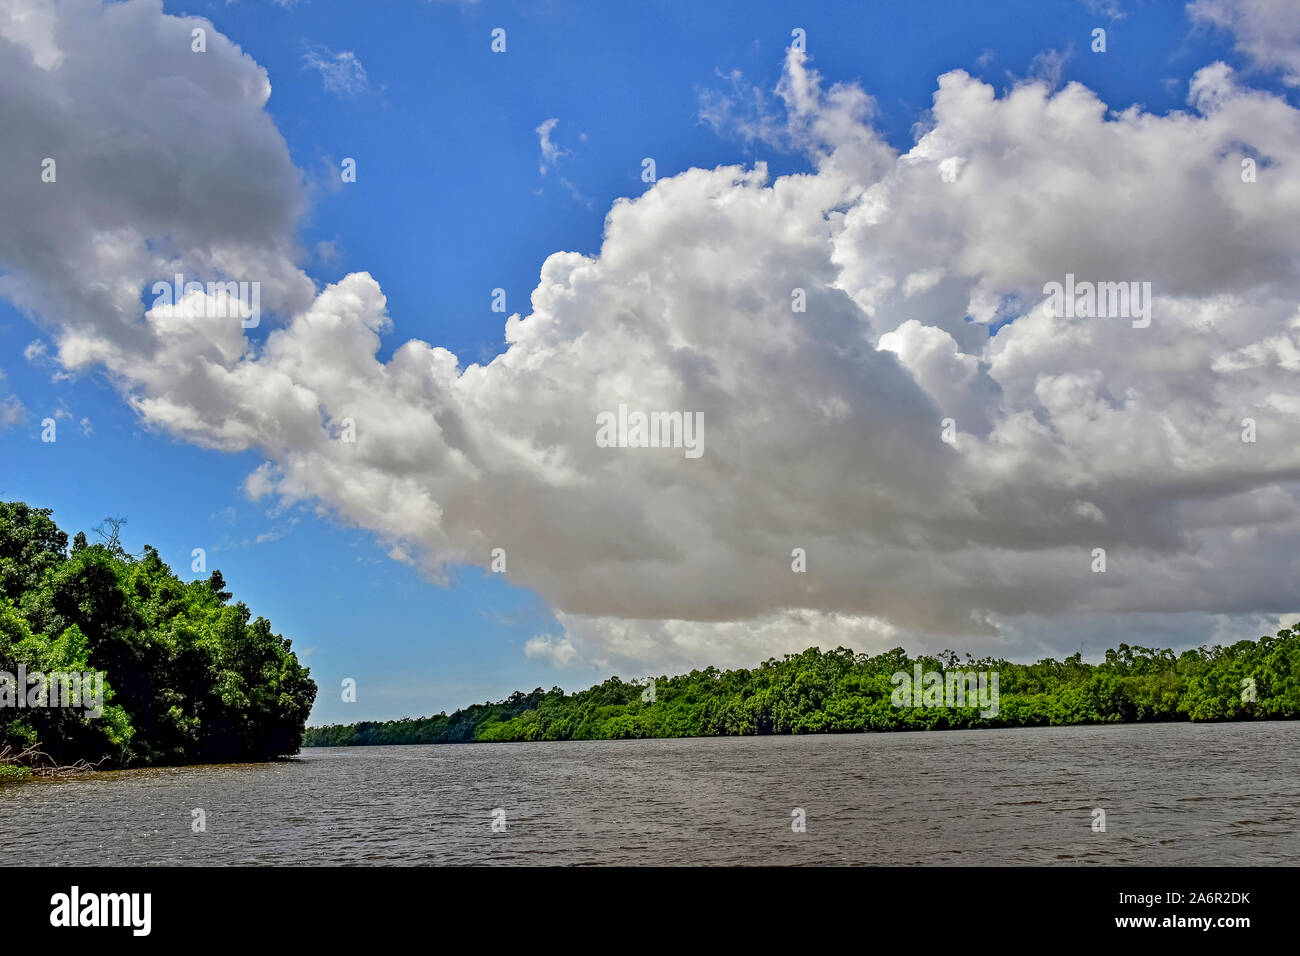 Südamerika, Brasilien, Lençóis Maranhenses - Fluss Preguicas Stockfoto